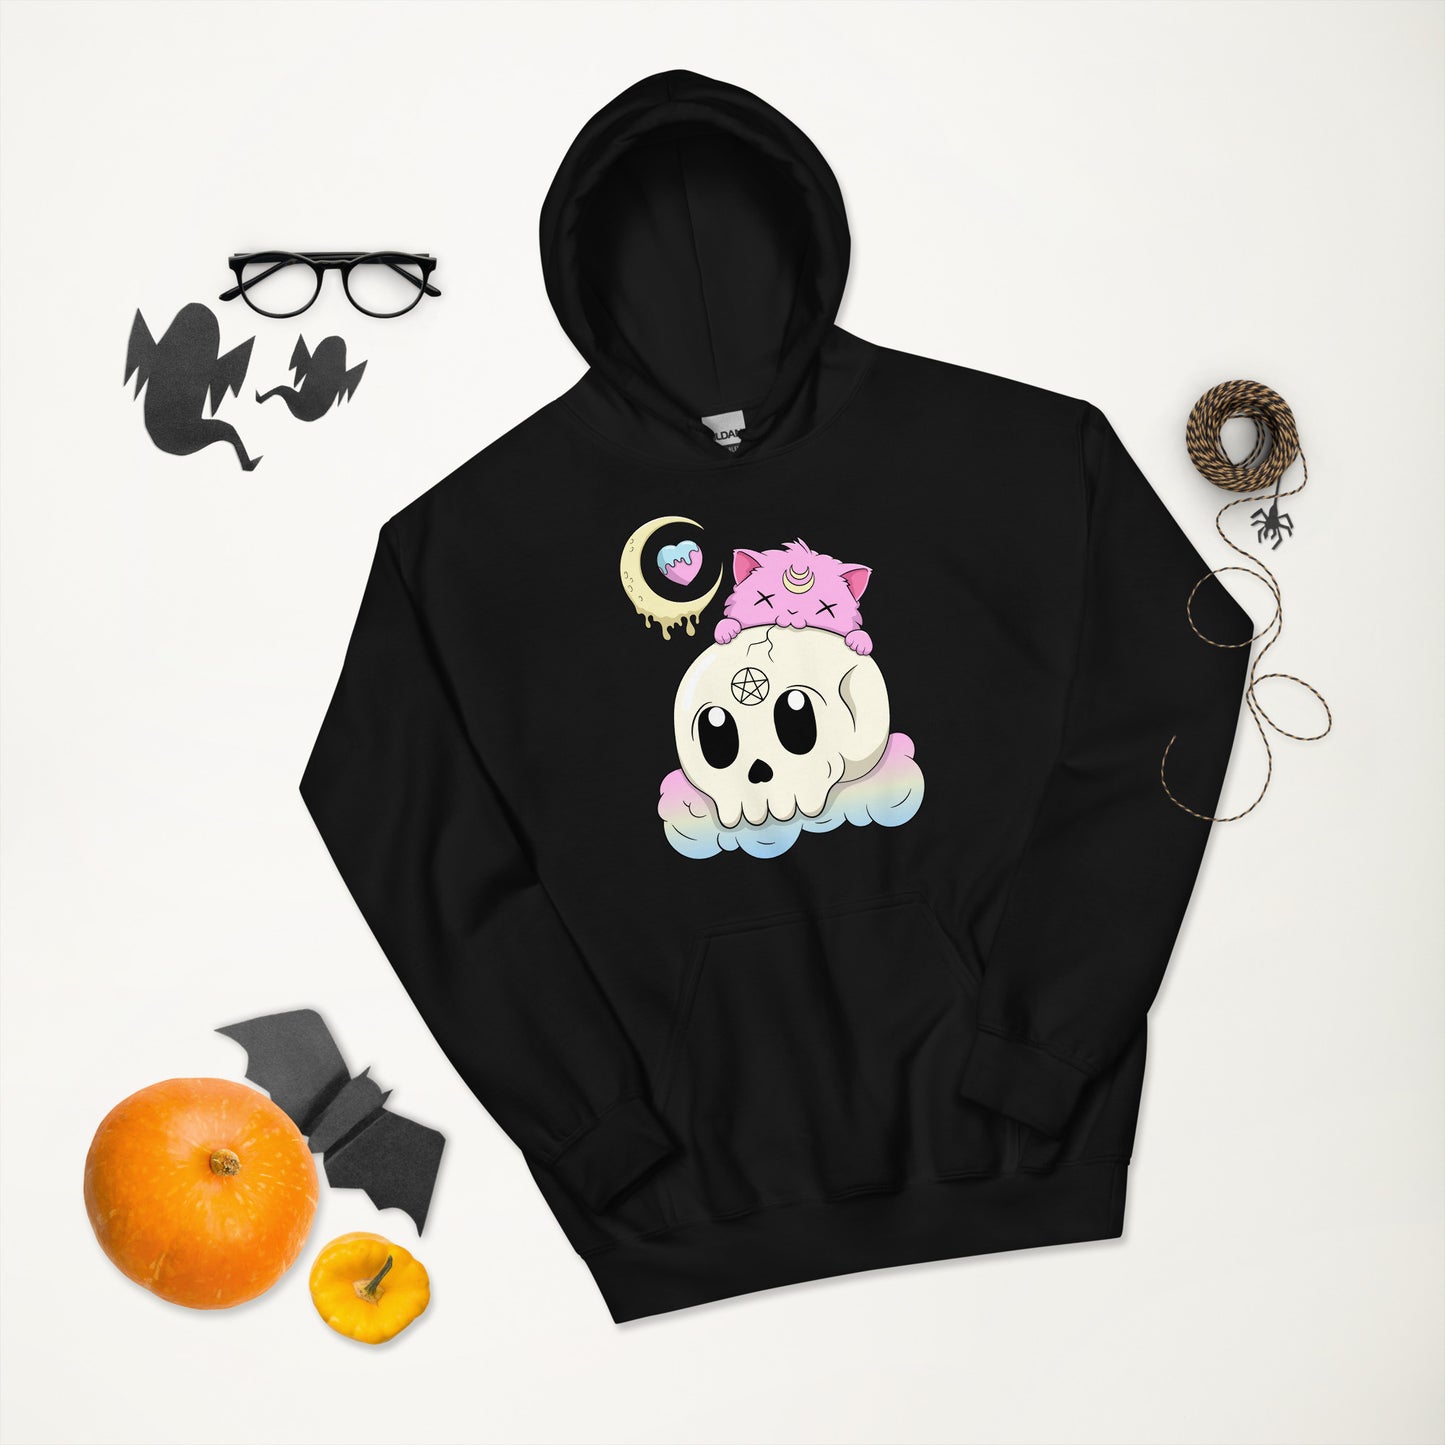 Creepy Kawaii Unisex Hoodie - Gothic Cat Sweatshirt